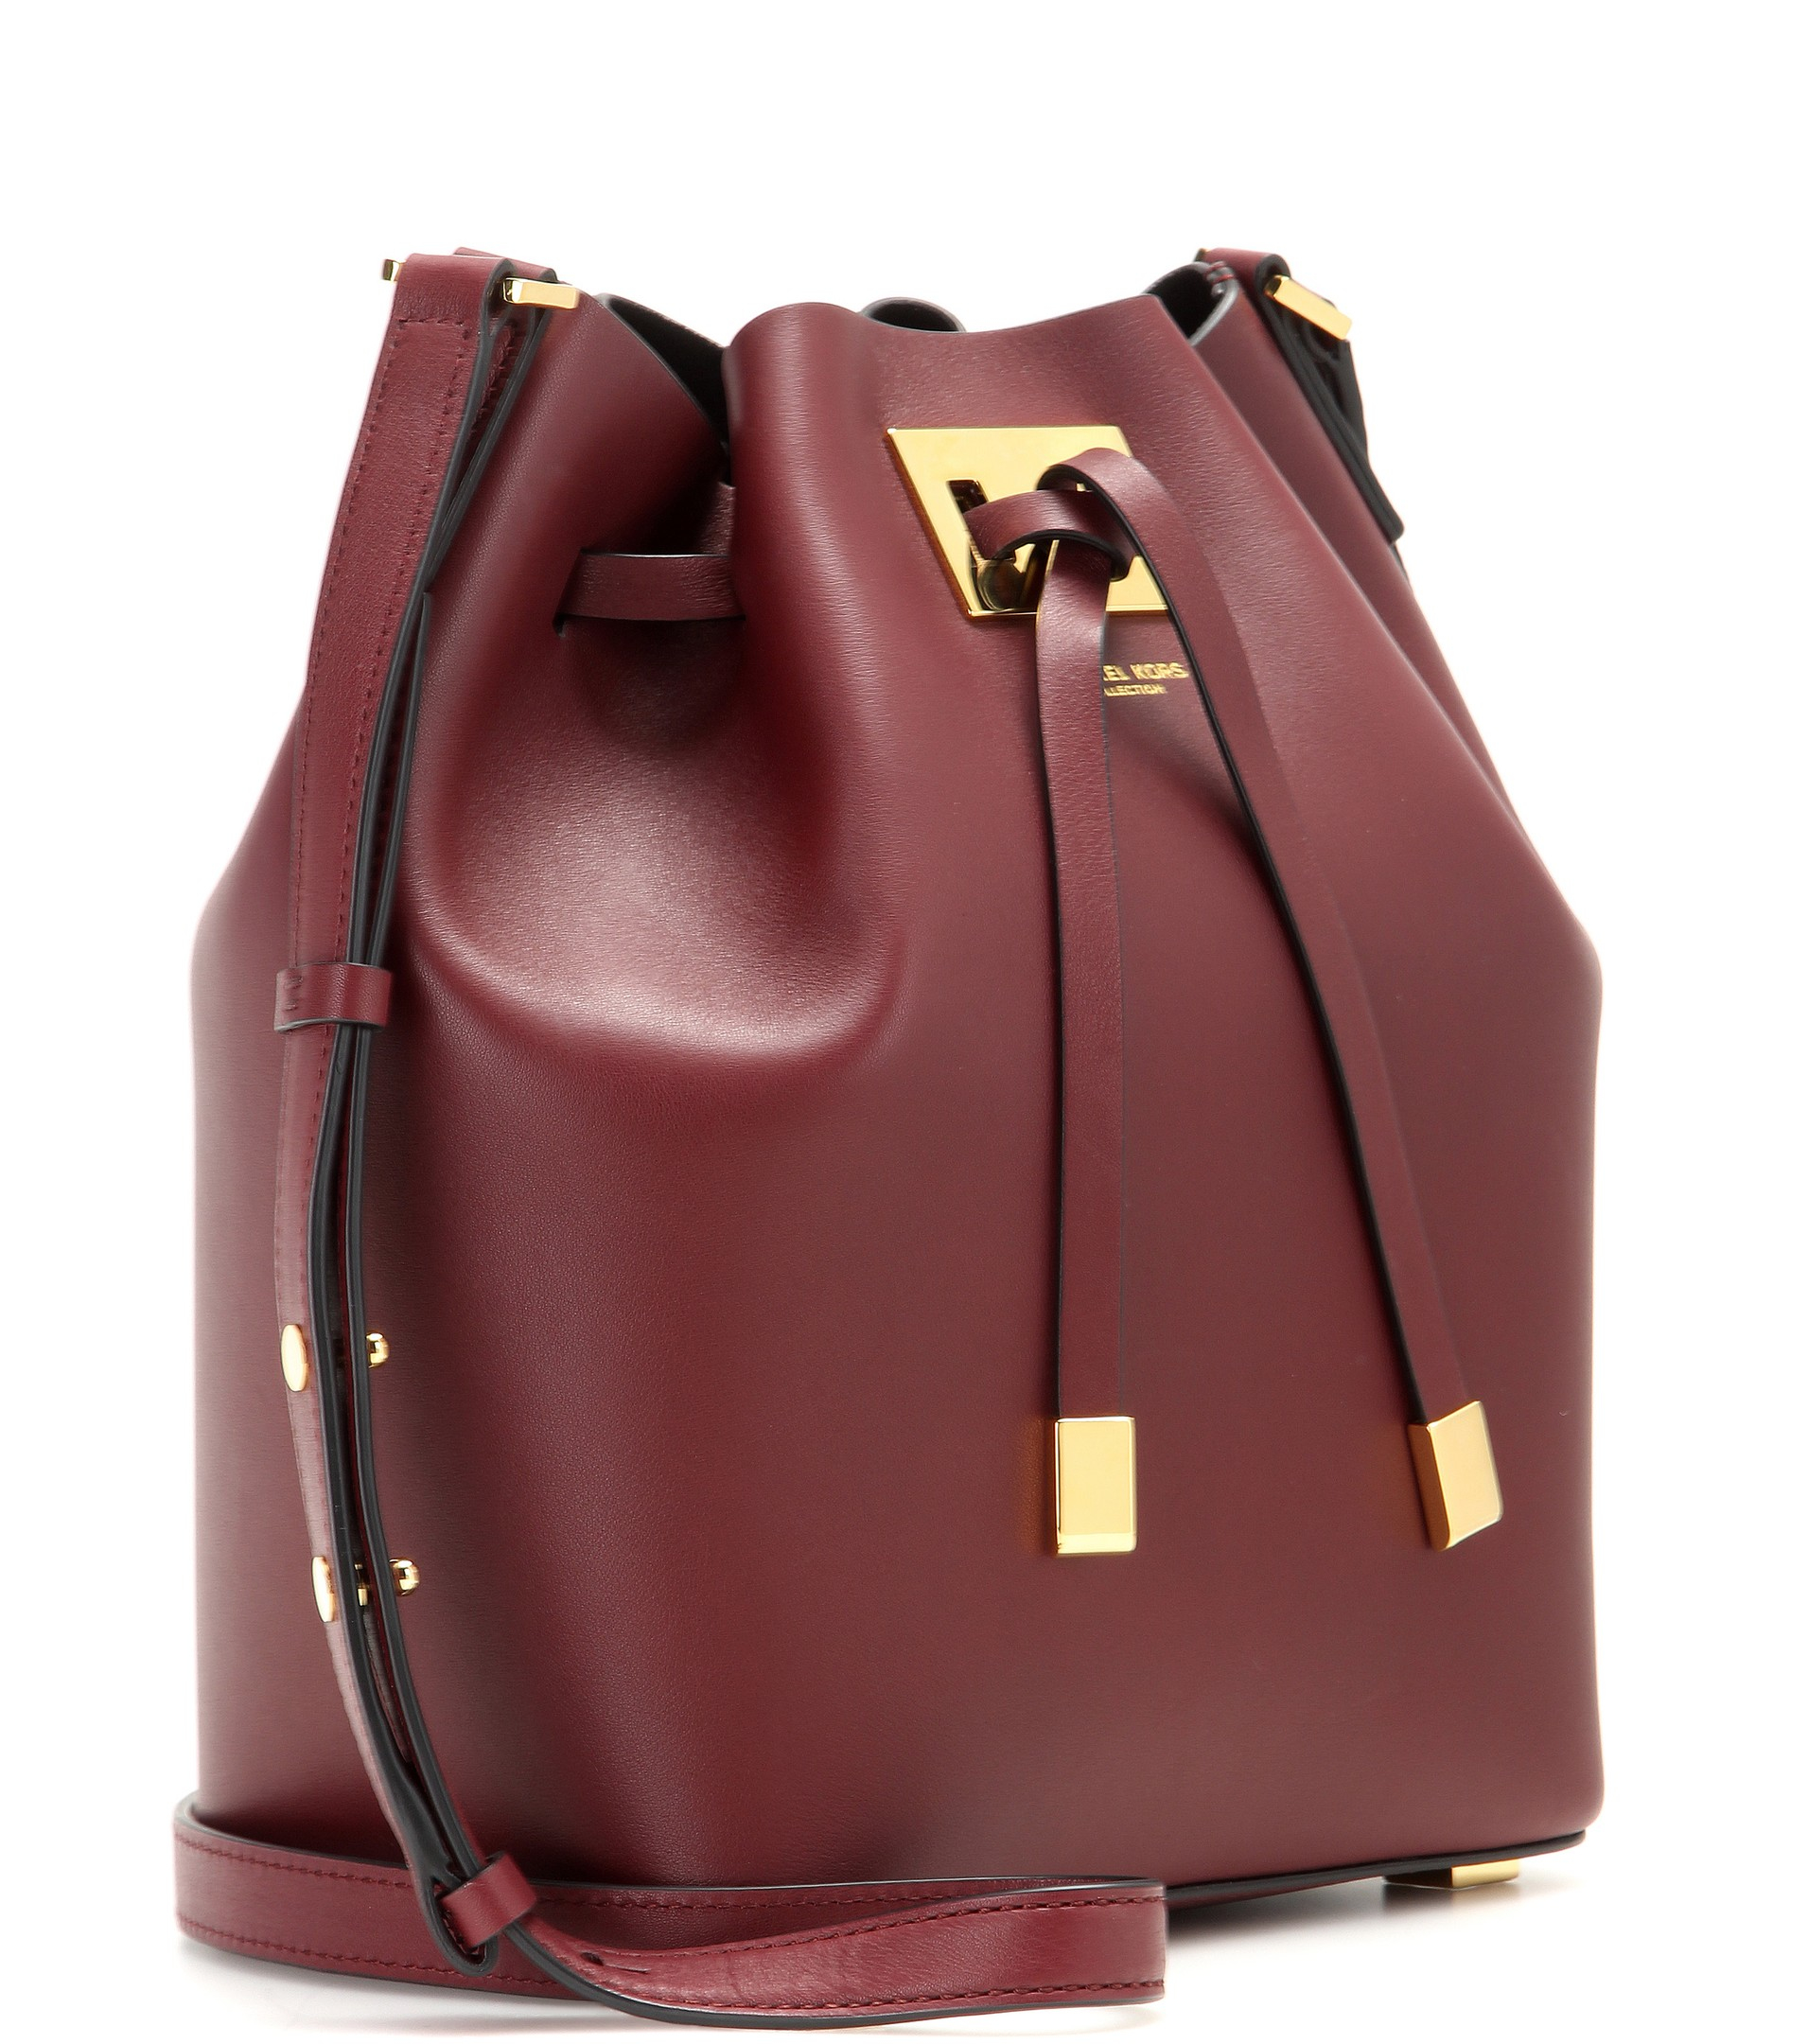 Michael Kors Miranda Medium Leather Bucket Bag in Claret (Red) - Lyst